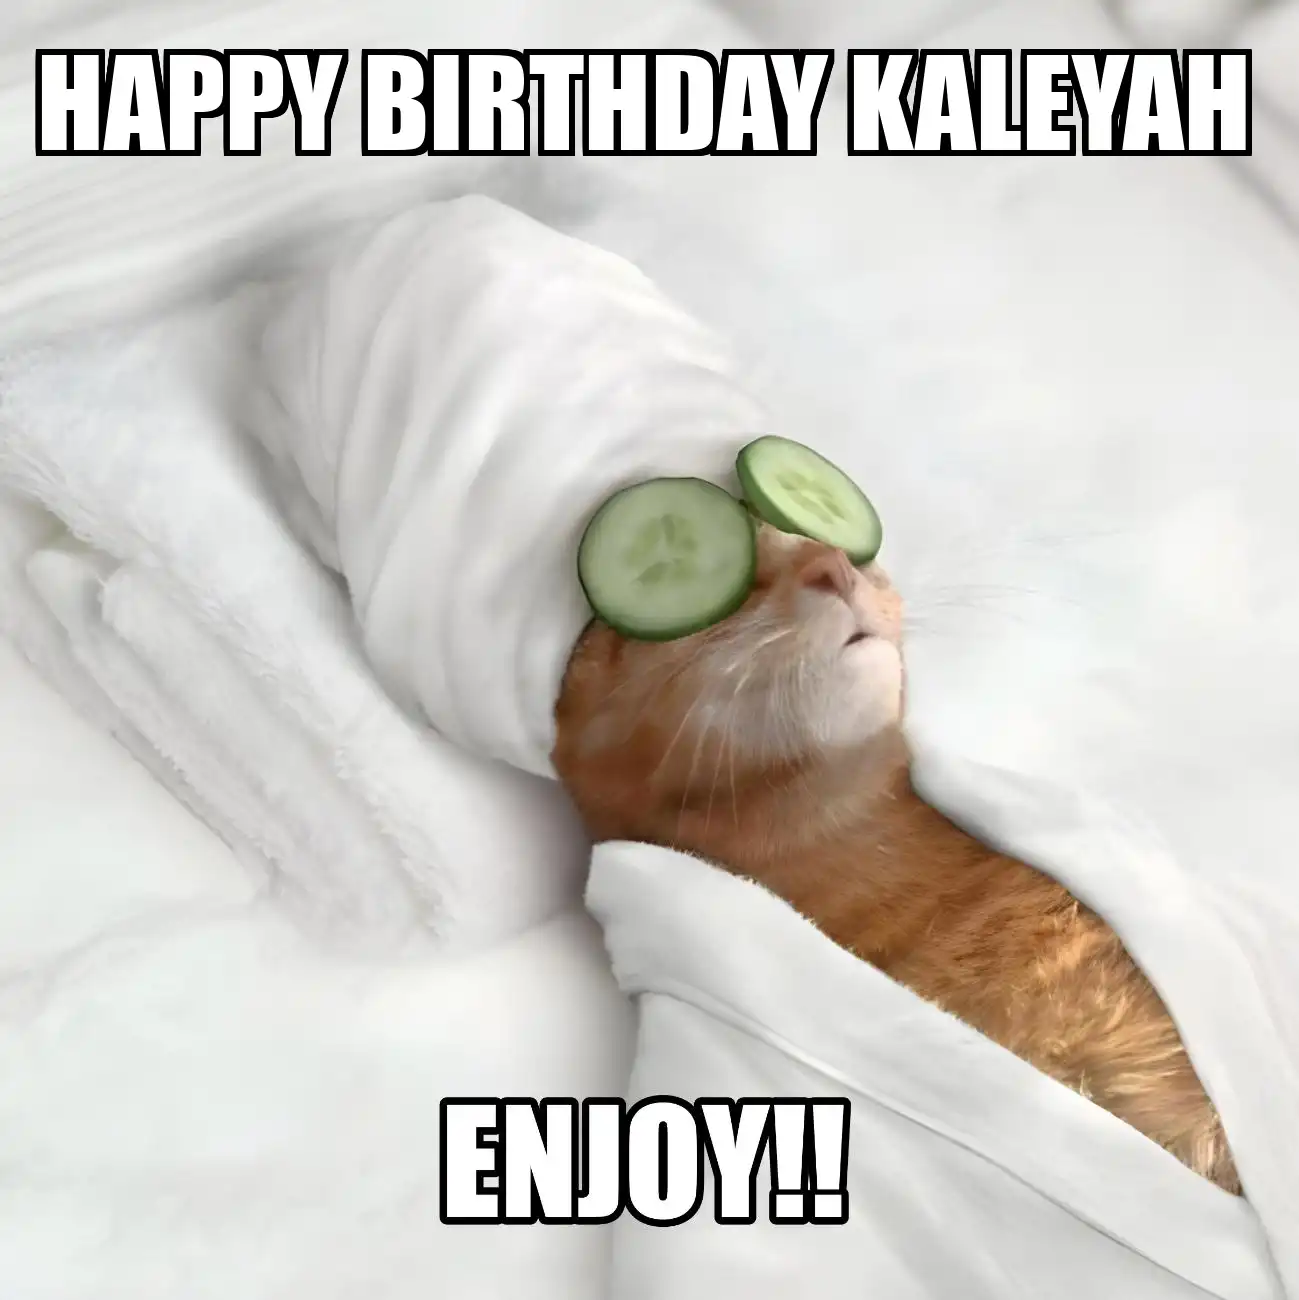 Happy Birthday Kaleyah Enjoy Cat Meme